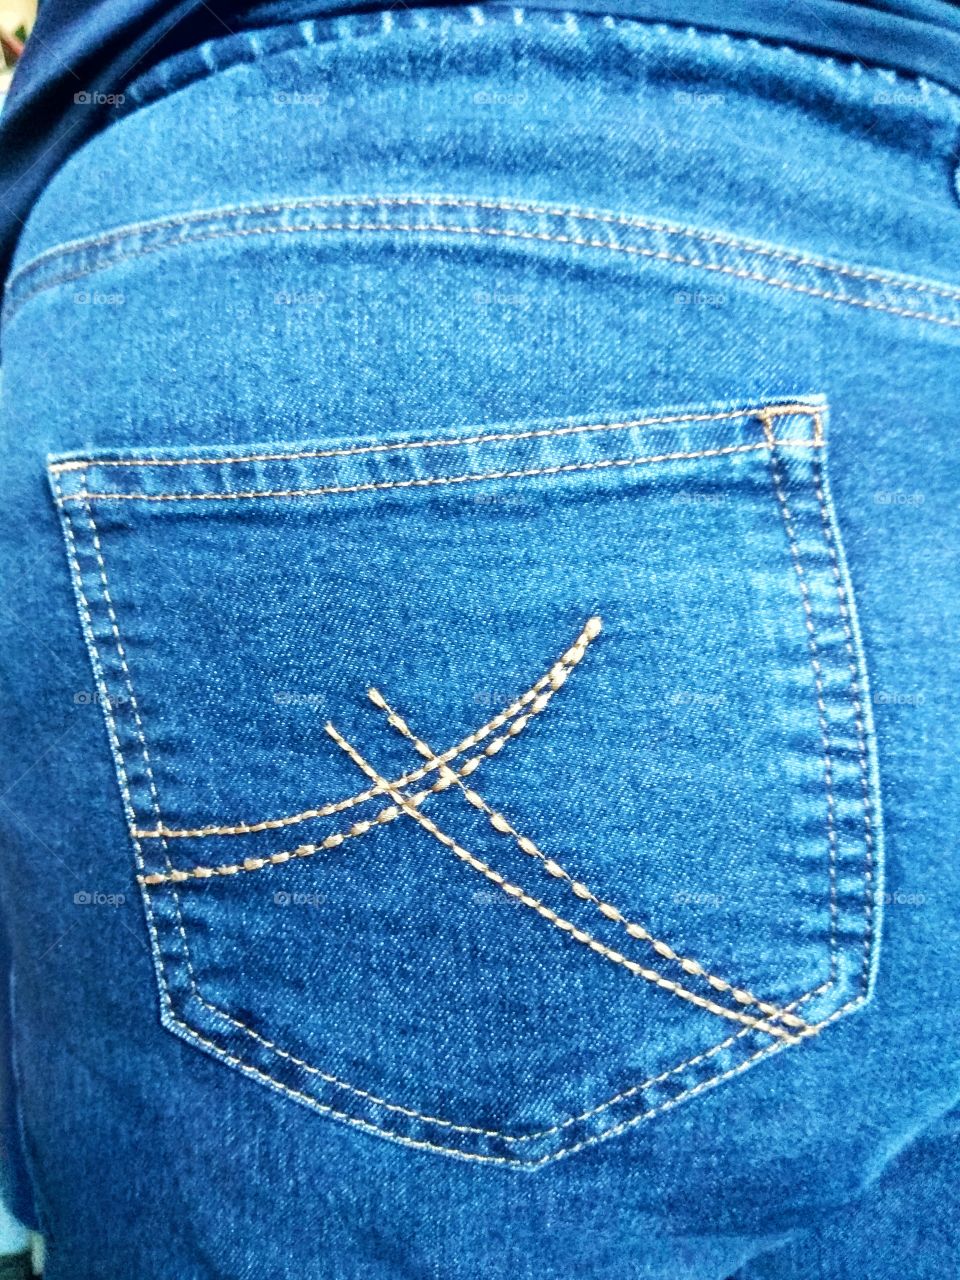 jeans, textiles, pocket